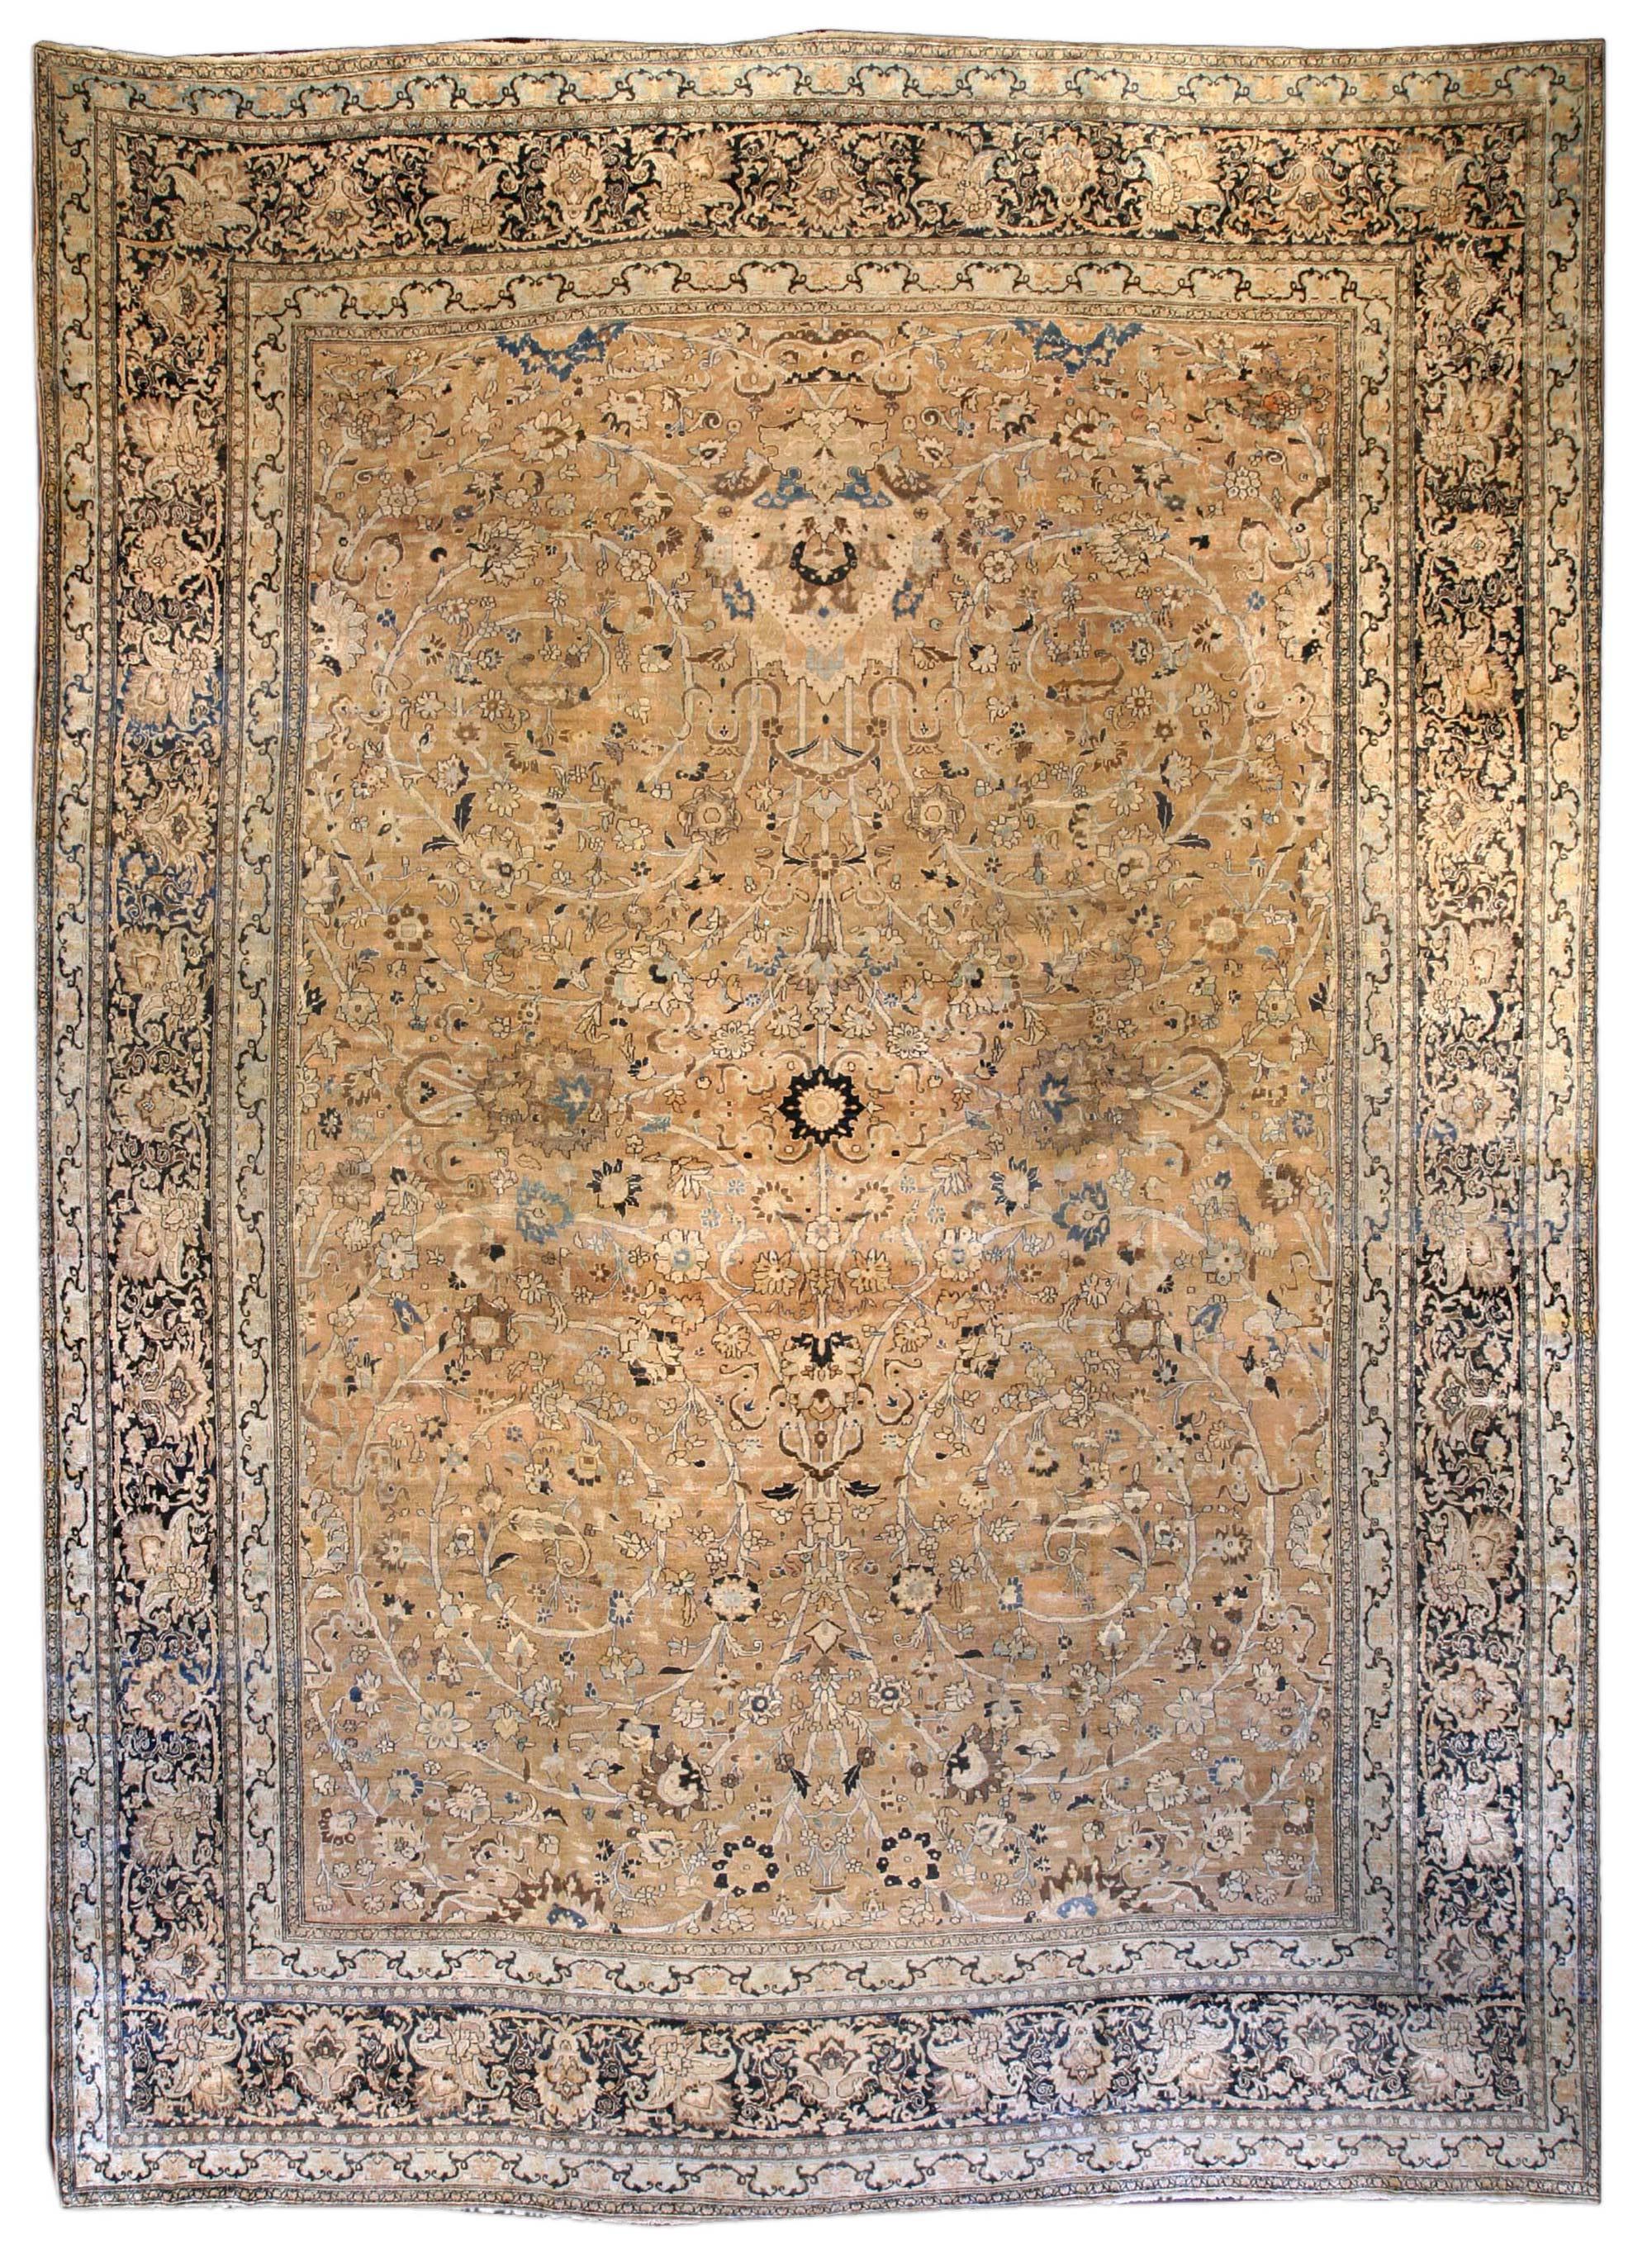 Early 20th Century Persian Khorassan Handmade Wool Rug